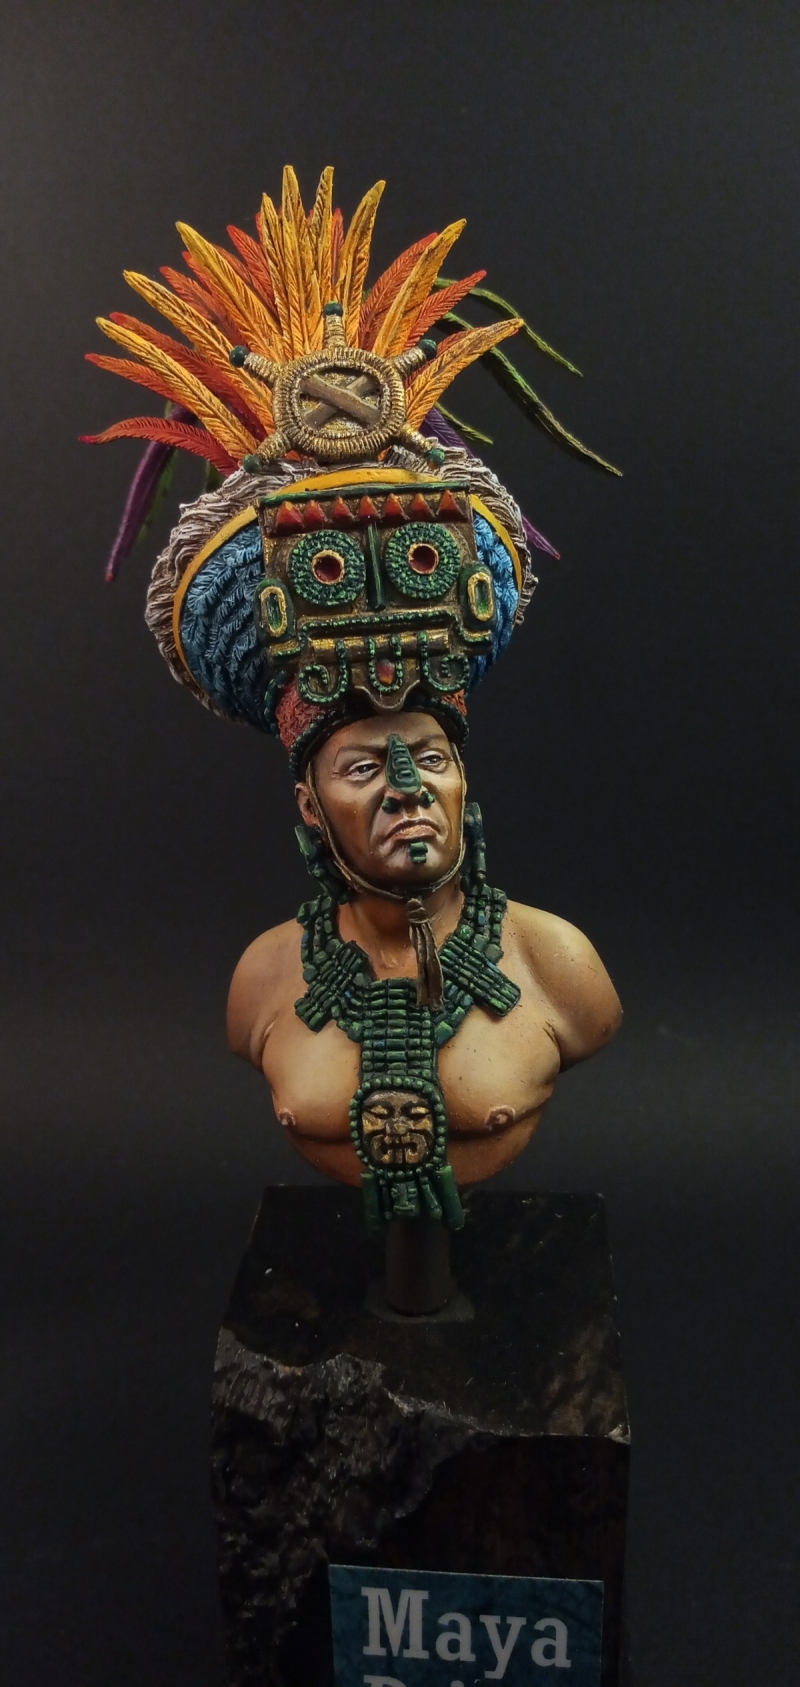 Maya Priest